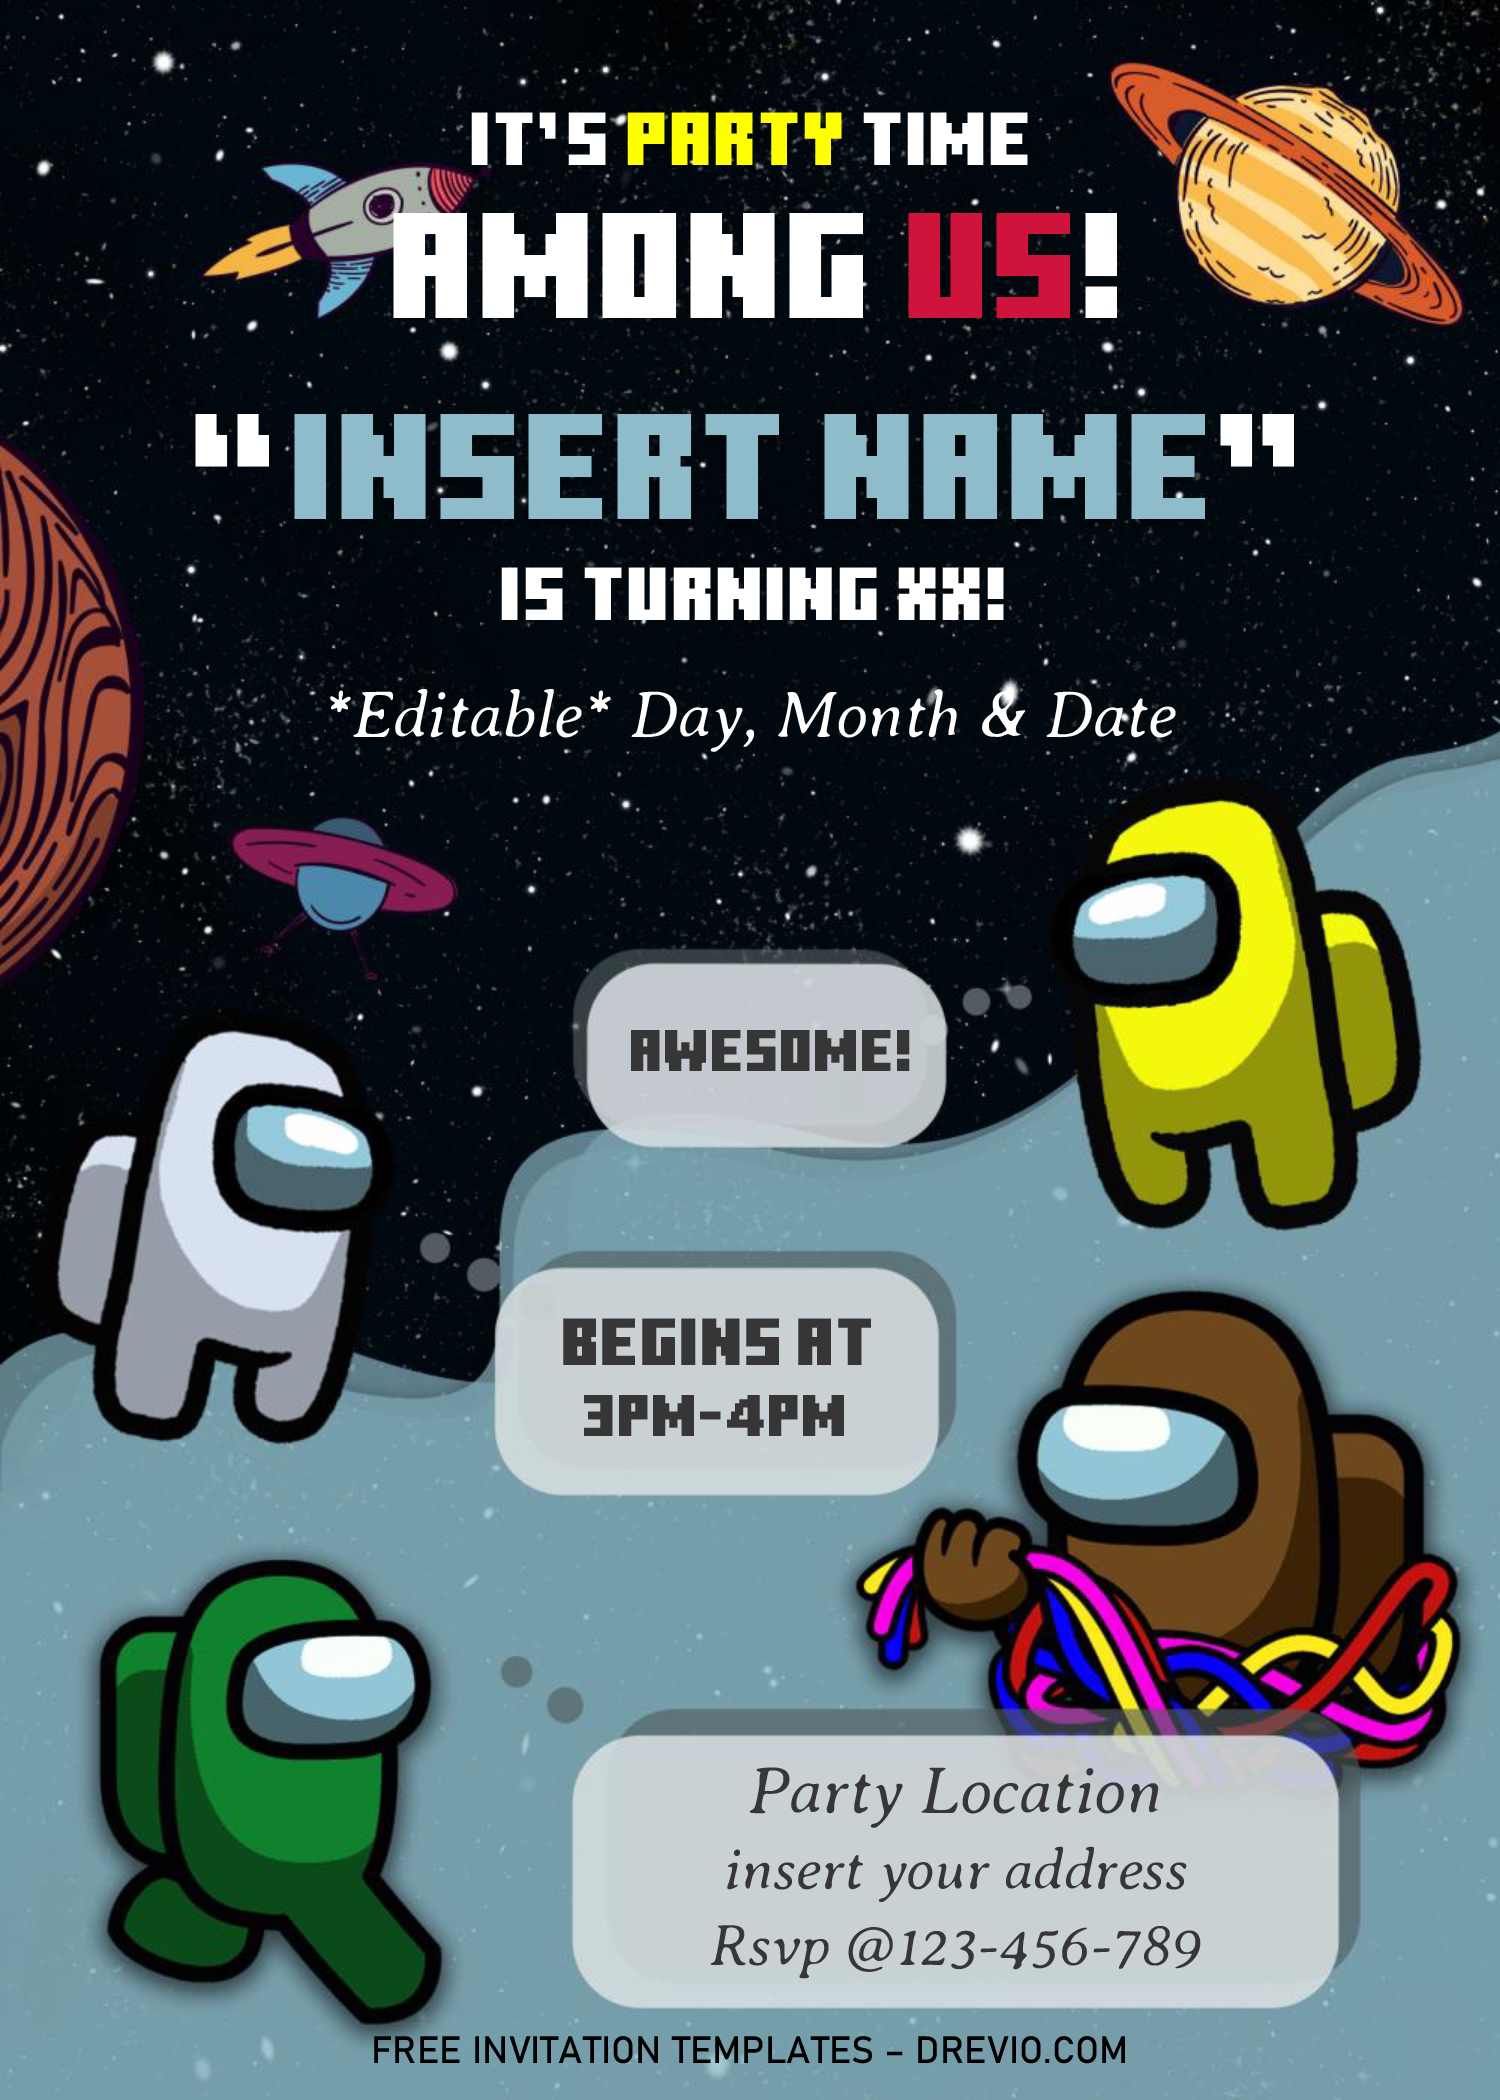 Party evite Invite Impostor Among US Digital Invitation Birthday Arcade NES